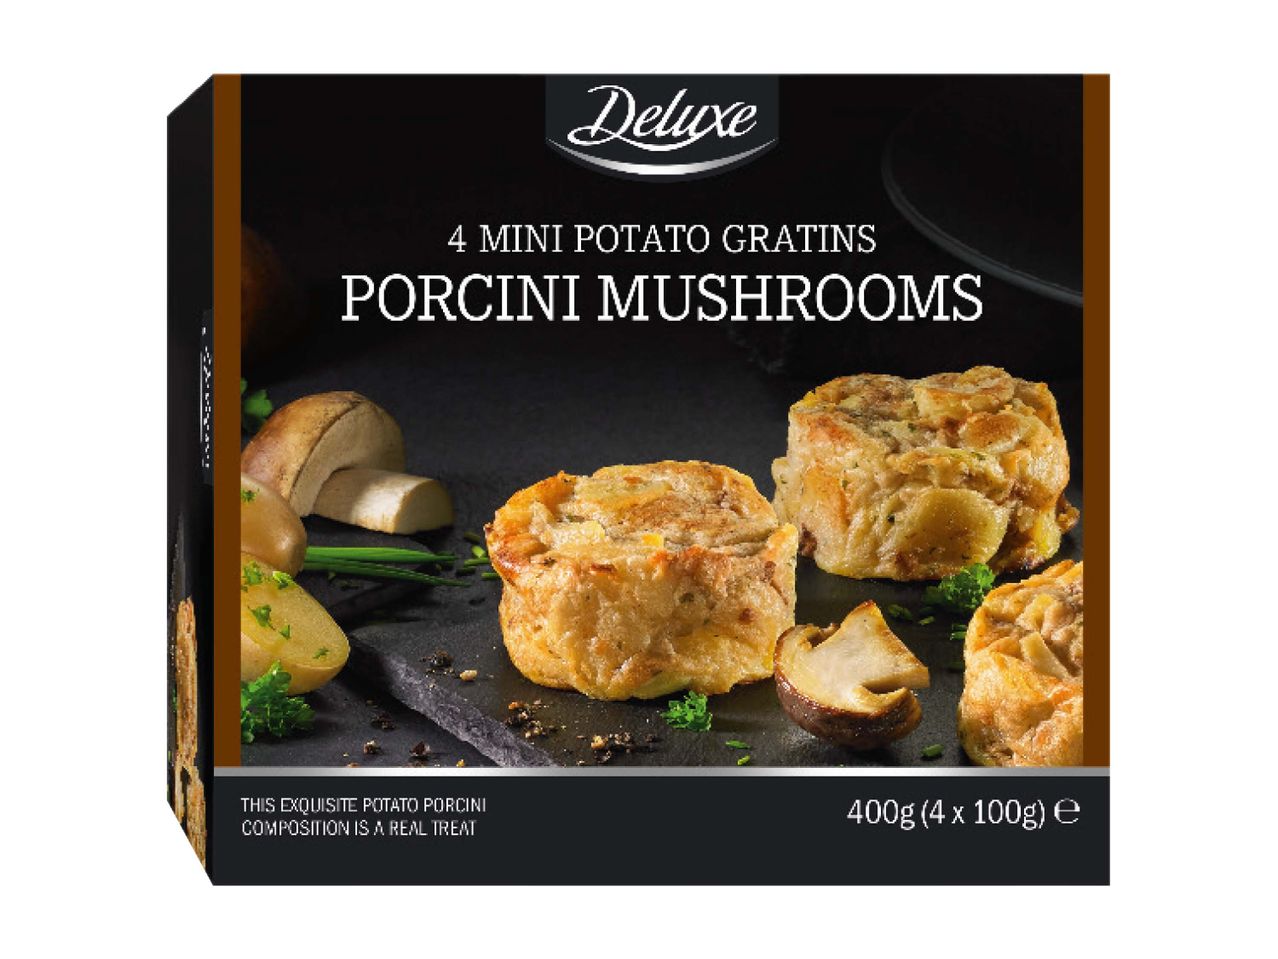 Go to full screen view: Potato Gratin with Porcini Mushroom - Image 1